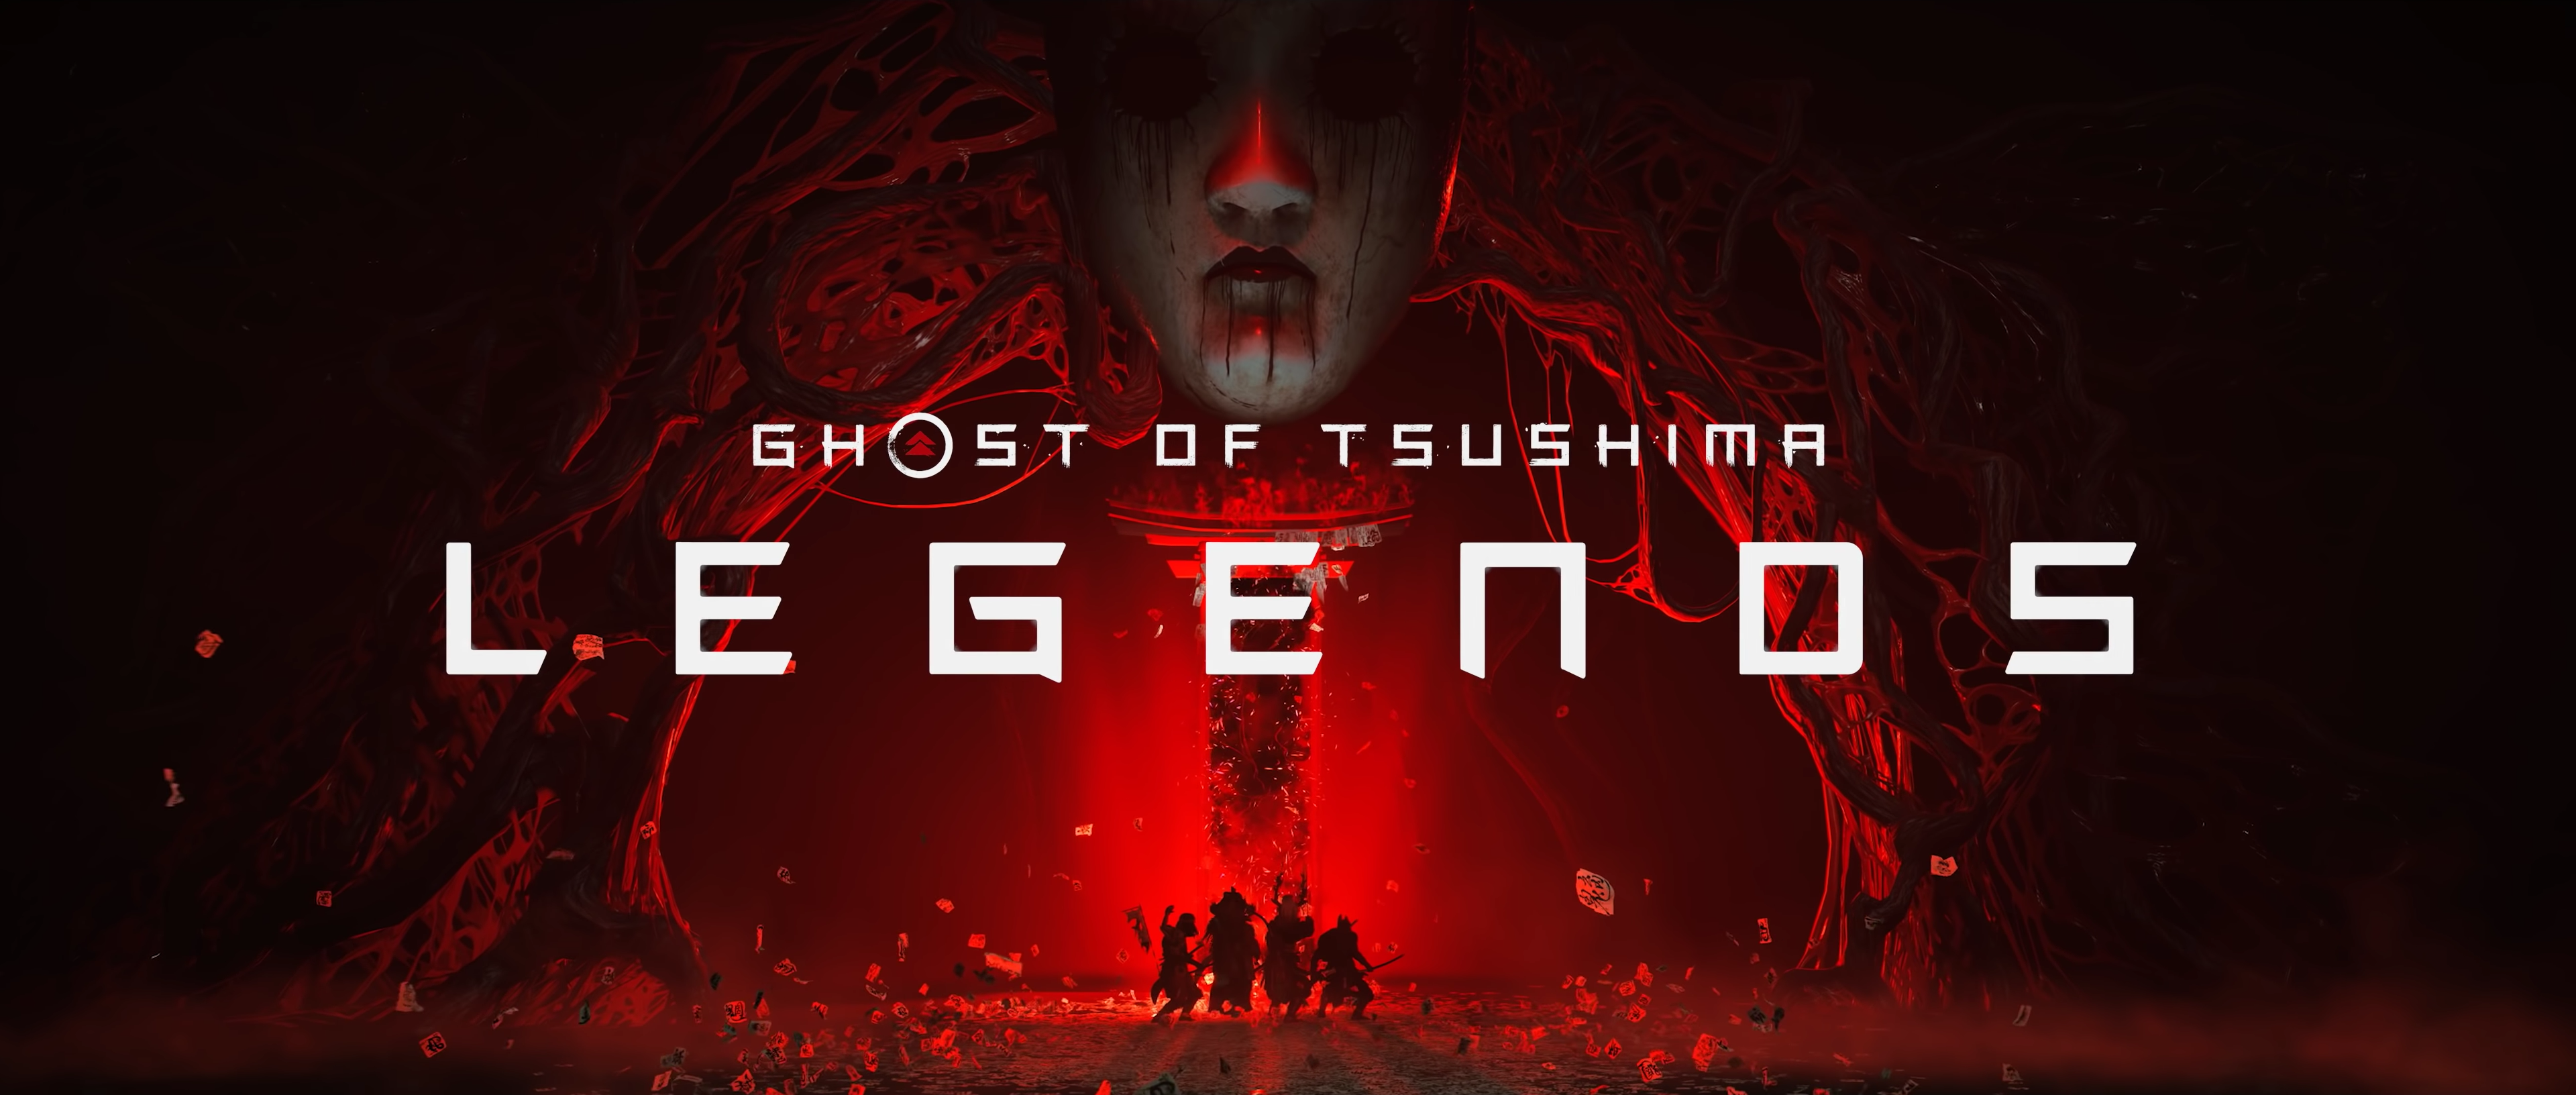 Ghost Of Tsushima PC?? : r/gog